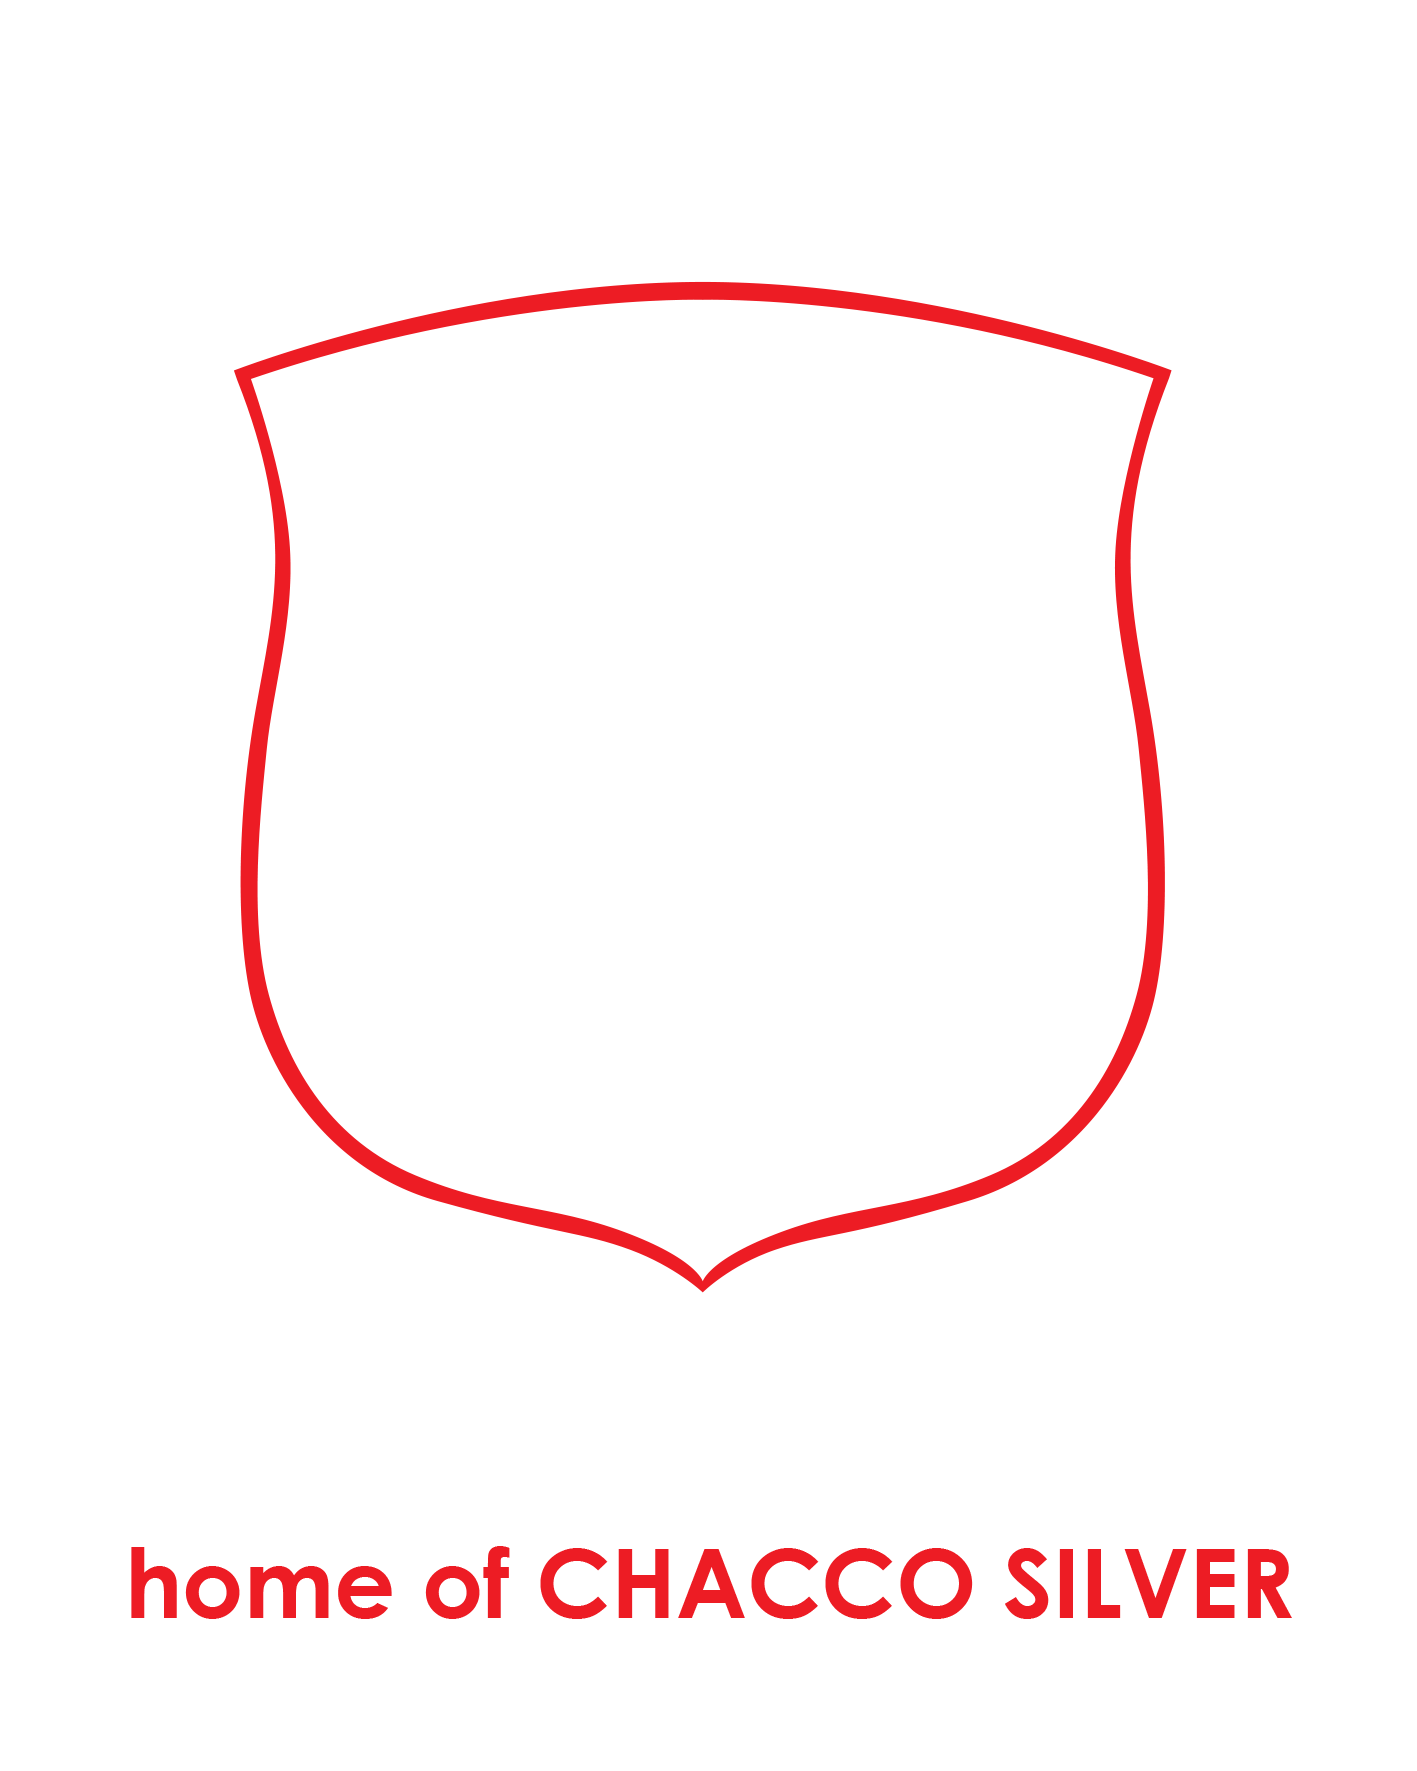 Matawhio Sporthorses